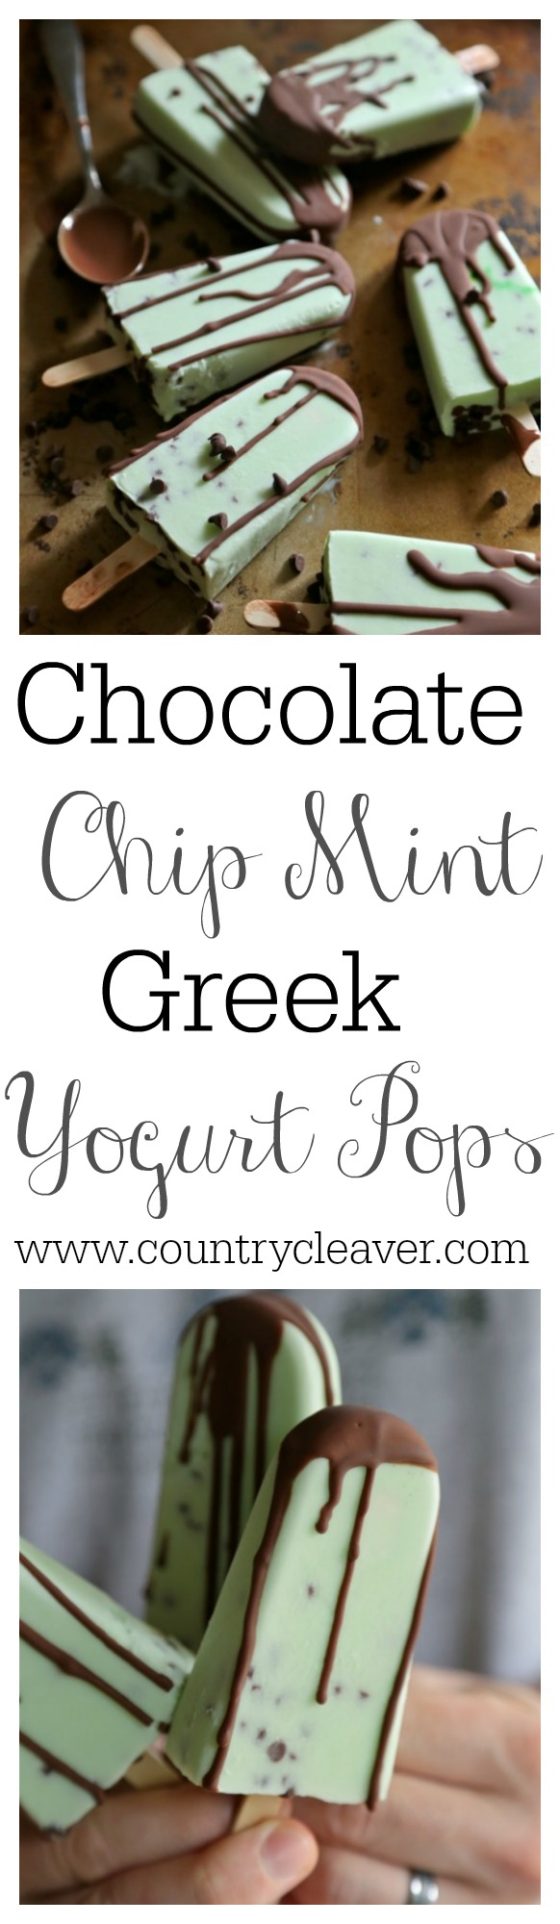 Chocolate Chip Mint Greek Yogurt Pops-- www.countrycleaver.com